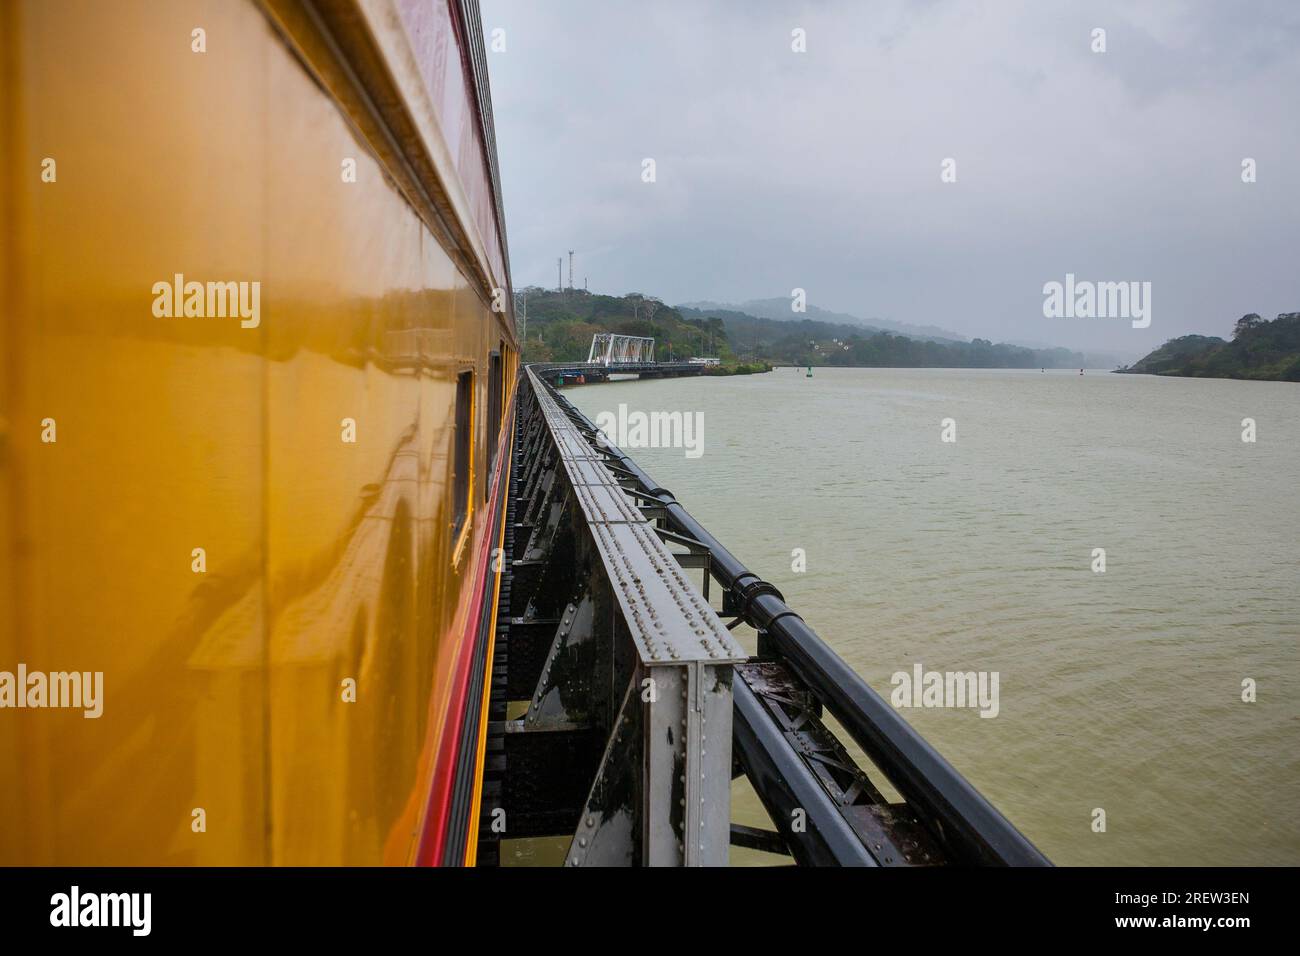 View from the train crossing the Gamboa bridge at Gamboa, along the Panama Canal, Republic of Panama, Central America. Stock Photo